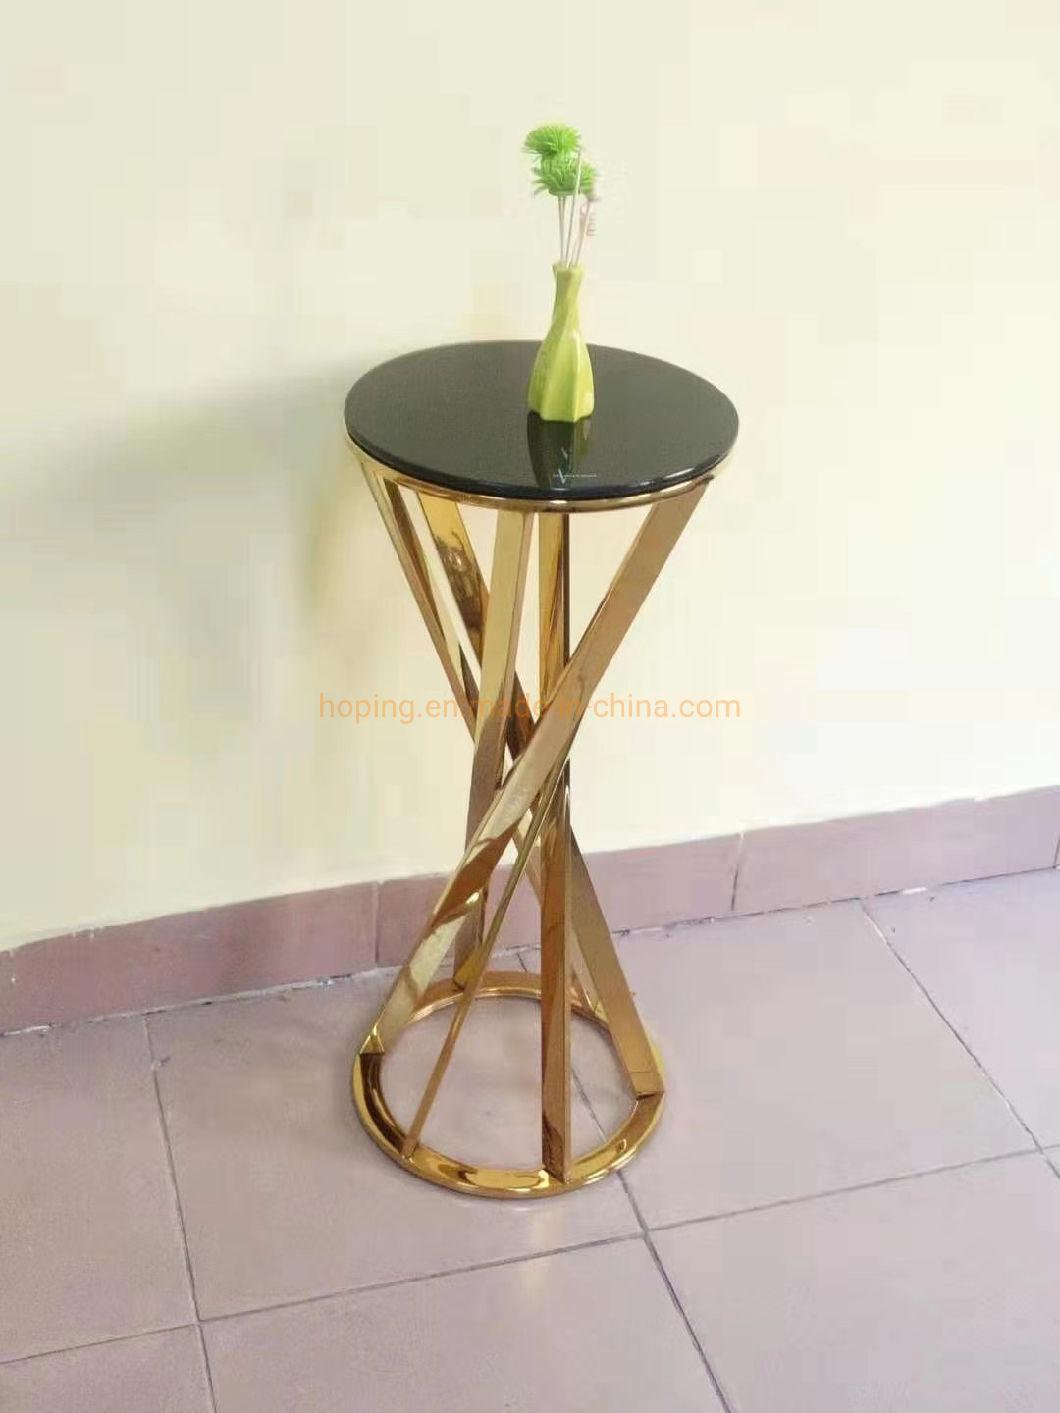 Wedding Event Table Indoor Home Decoration Outdoor Garden Metal Planter Flower Plant Pot Stand